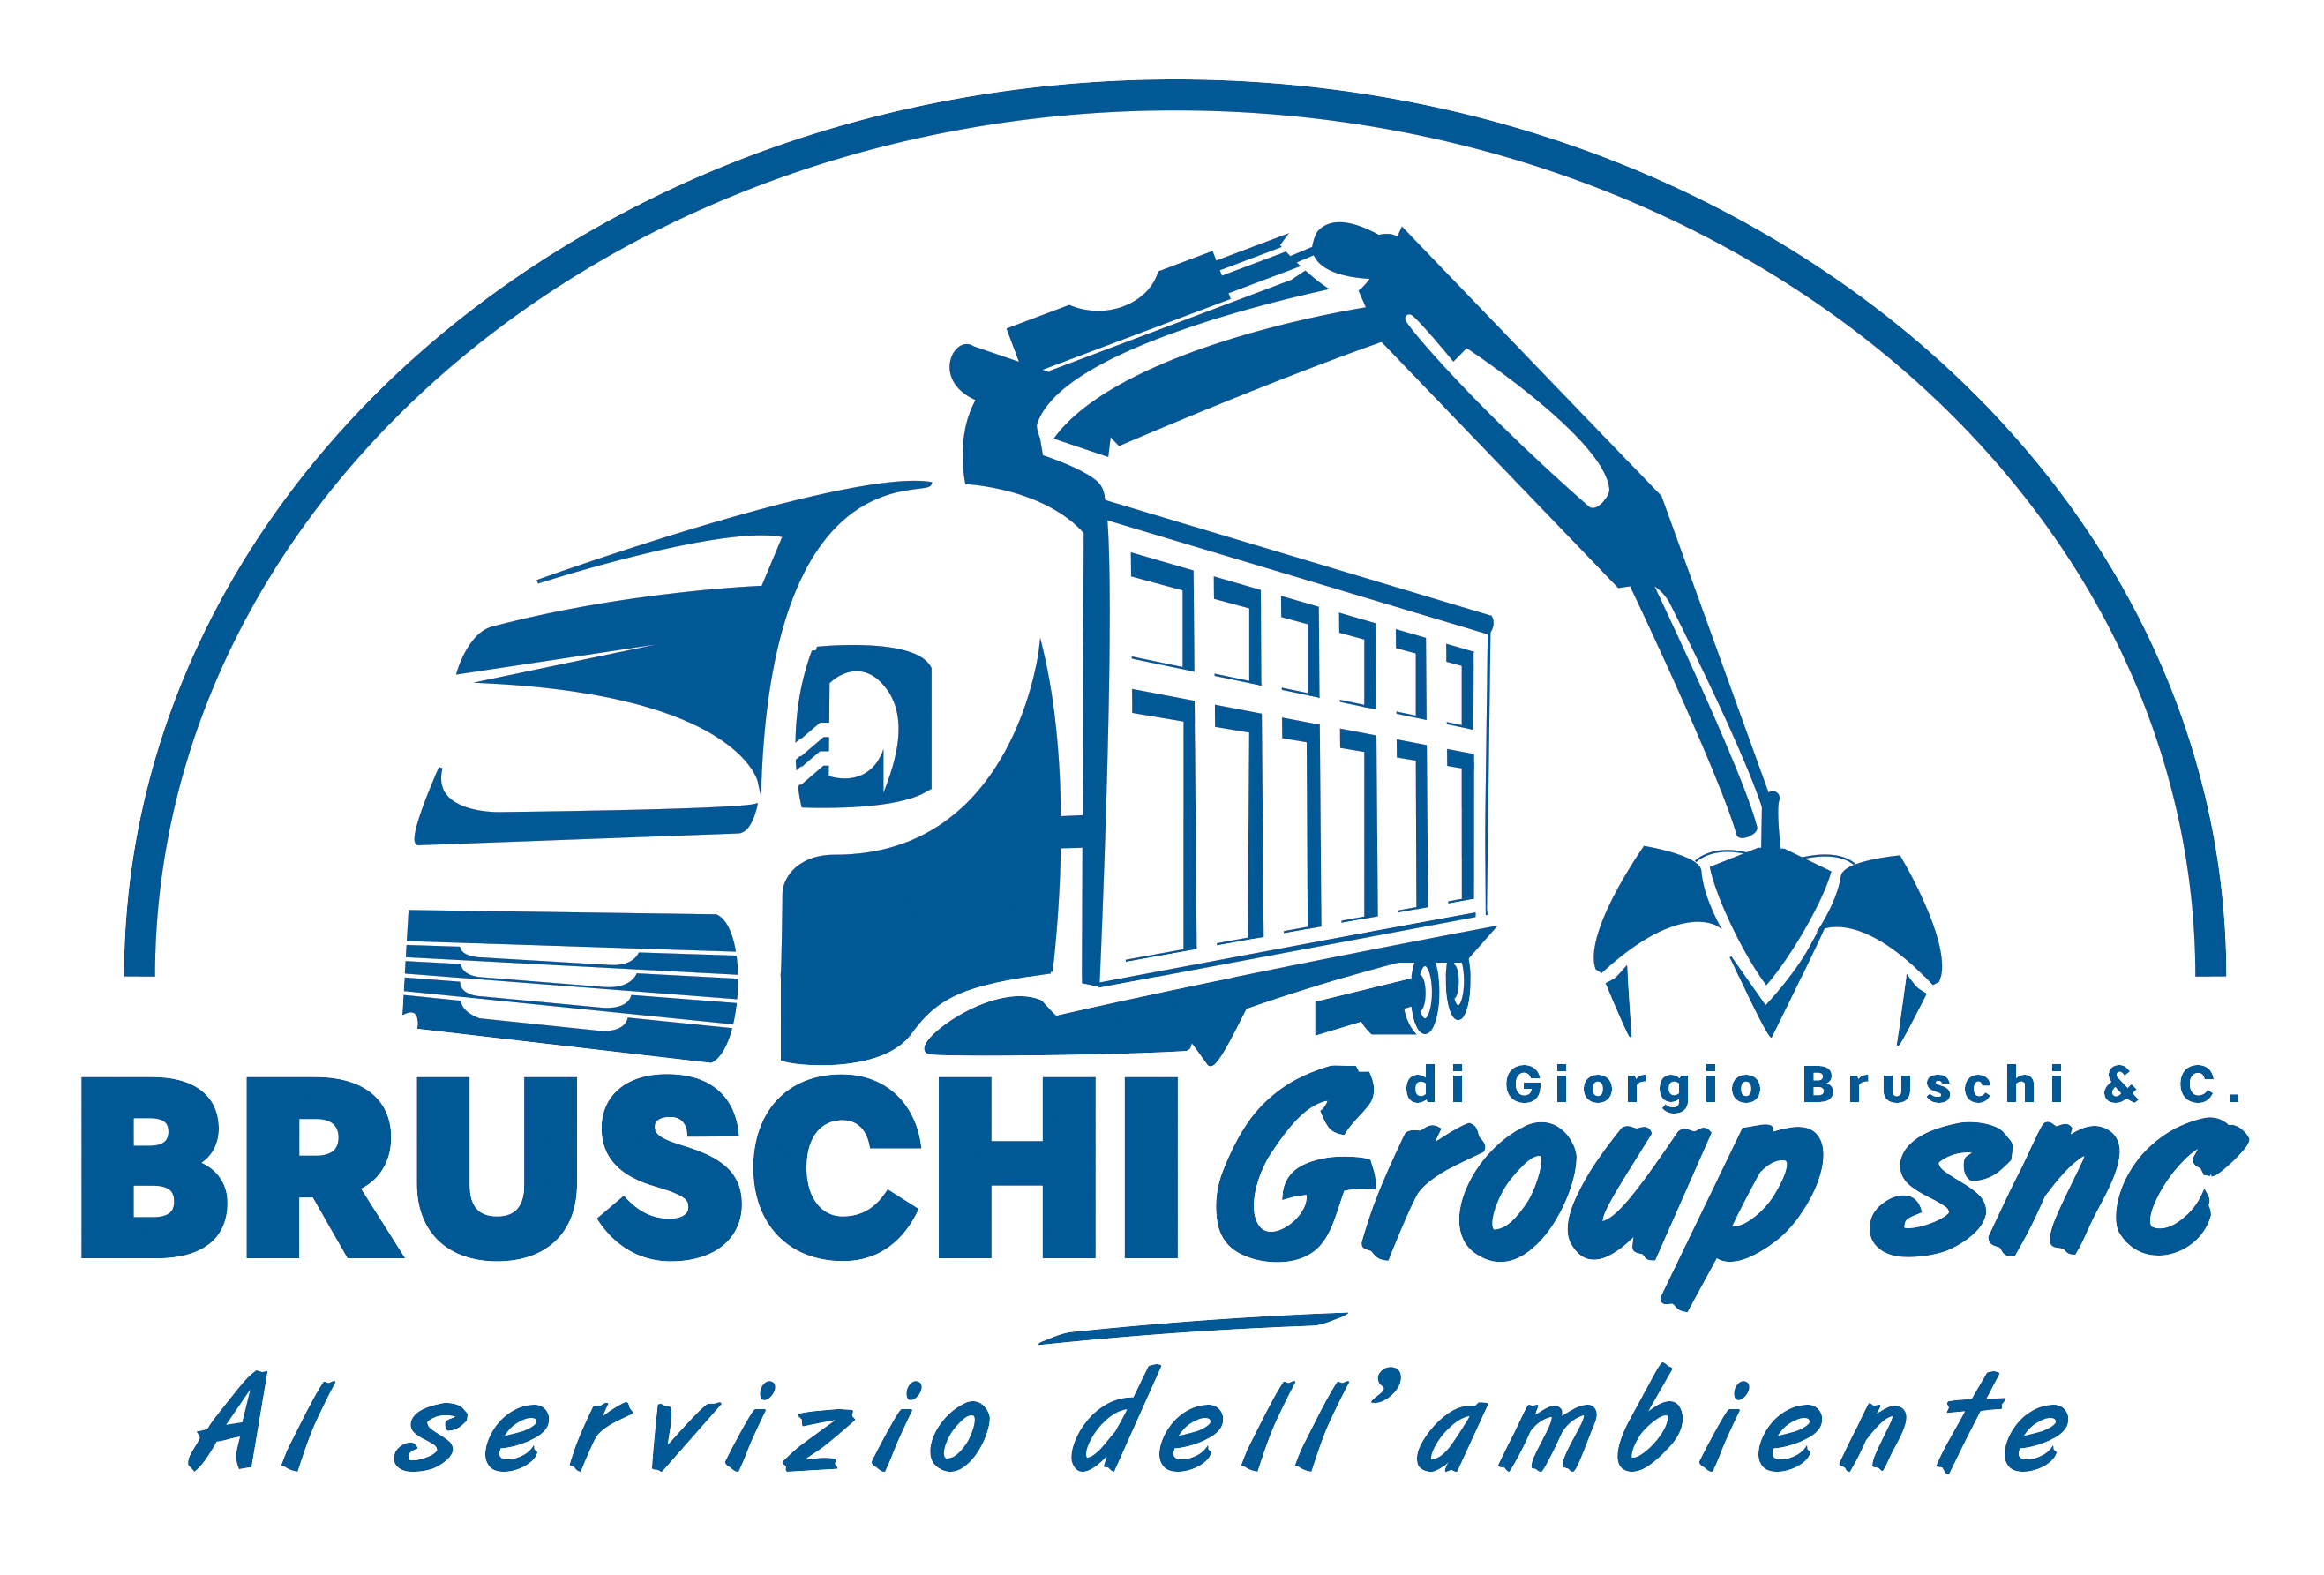 Bruschi Group